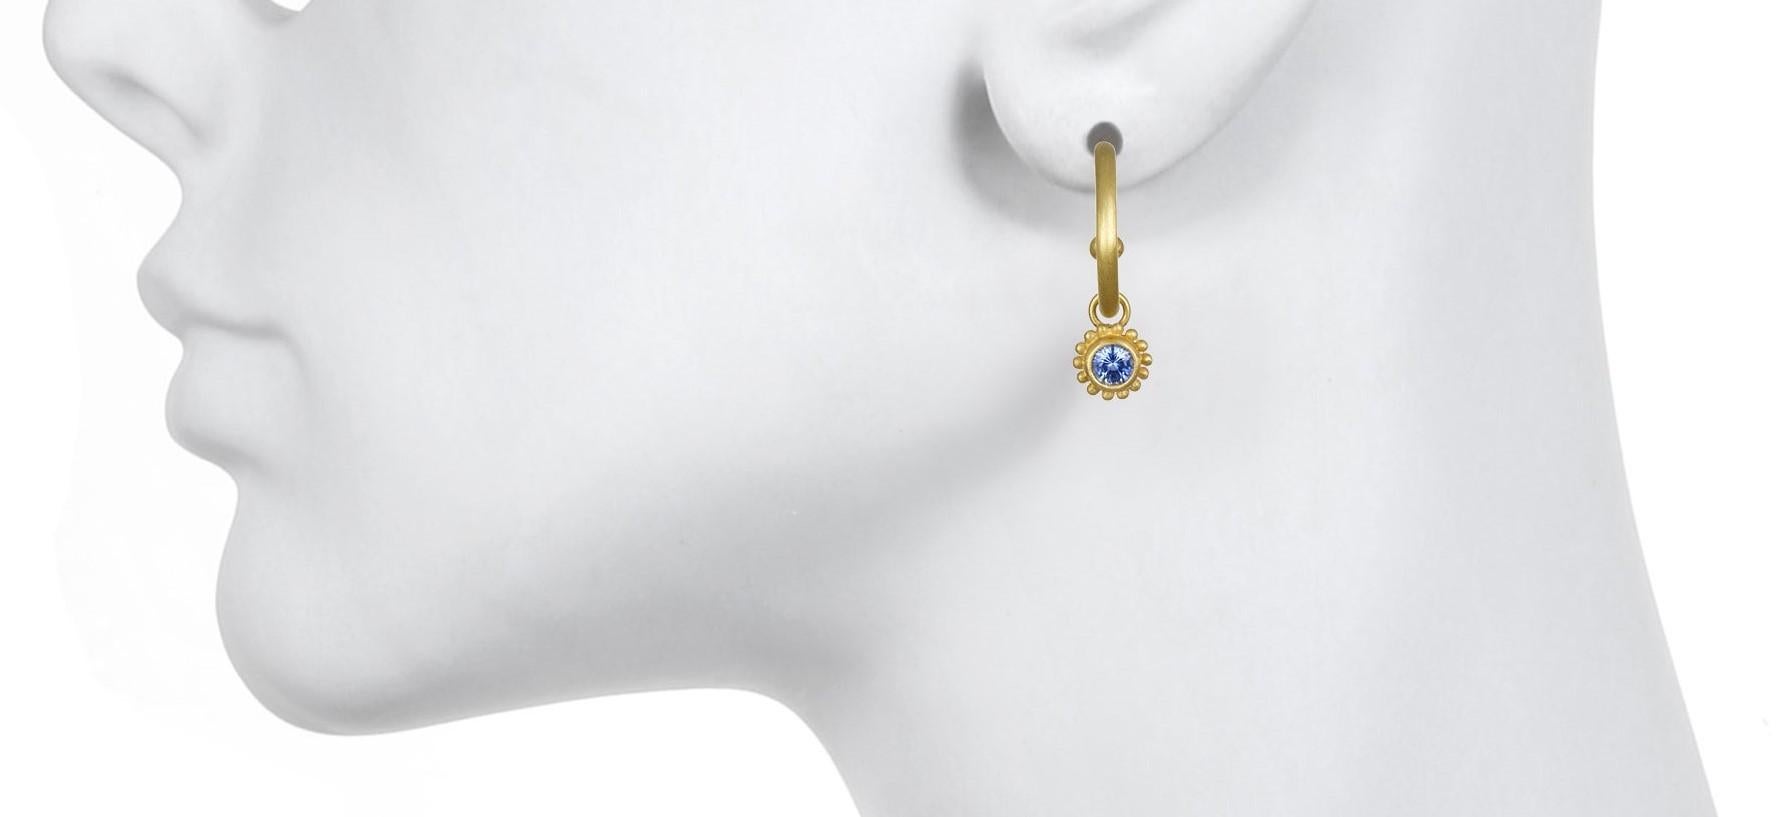 Contemporary Faye Kim 18 Karat Gold Hoops with Ceylon Blue Sapphire Drops